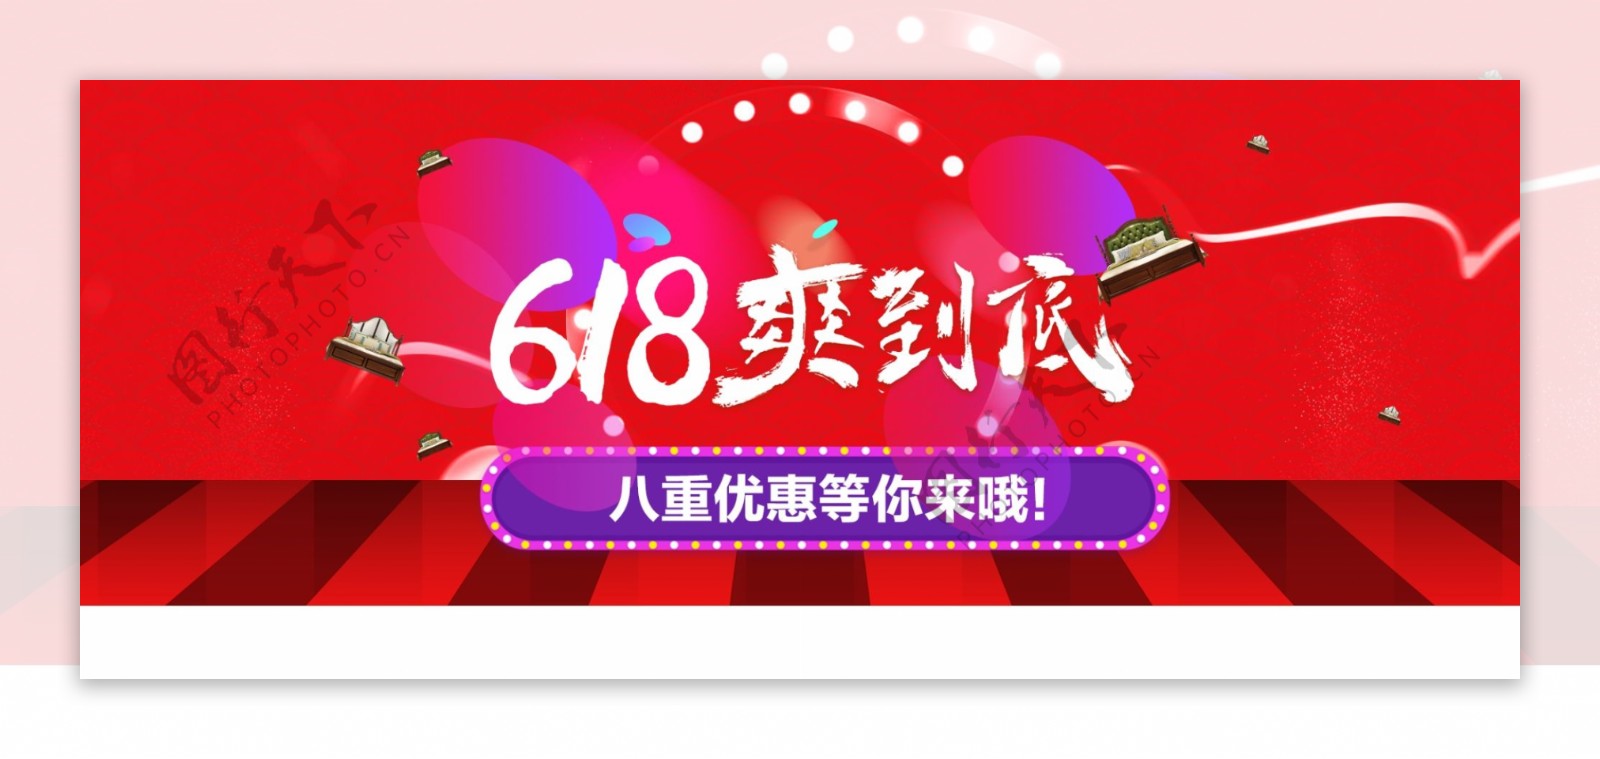 节日海报banner淘宝电商618